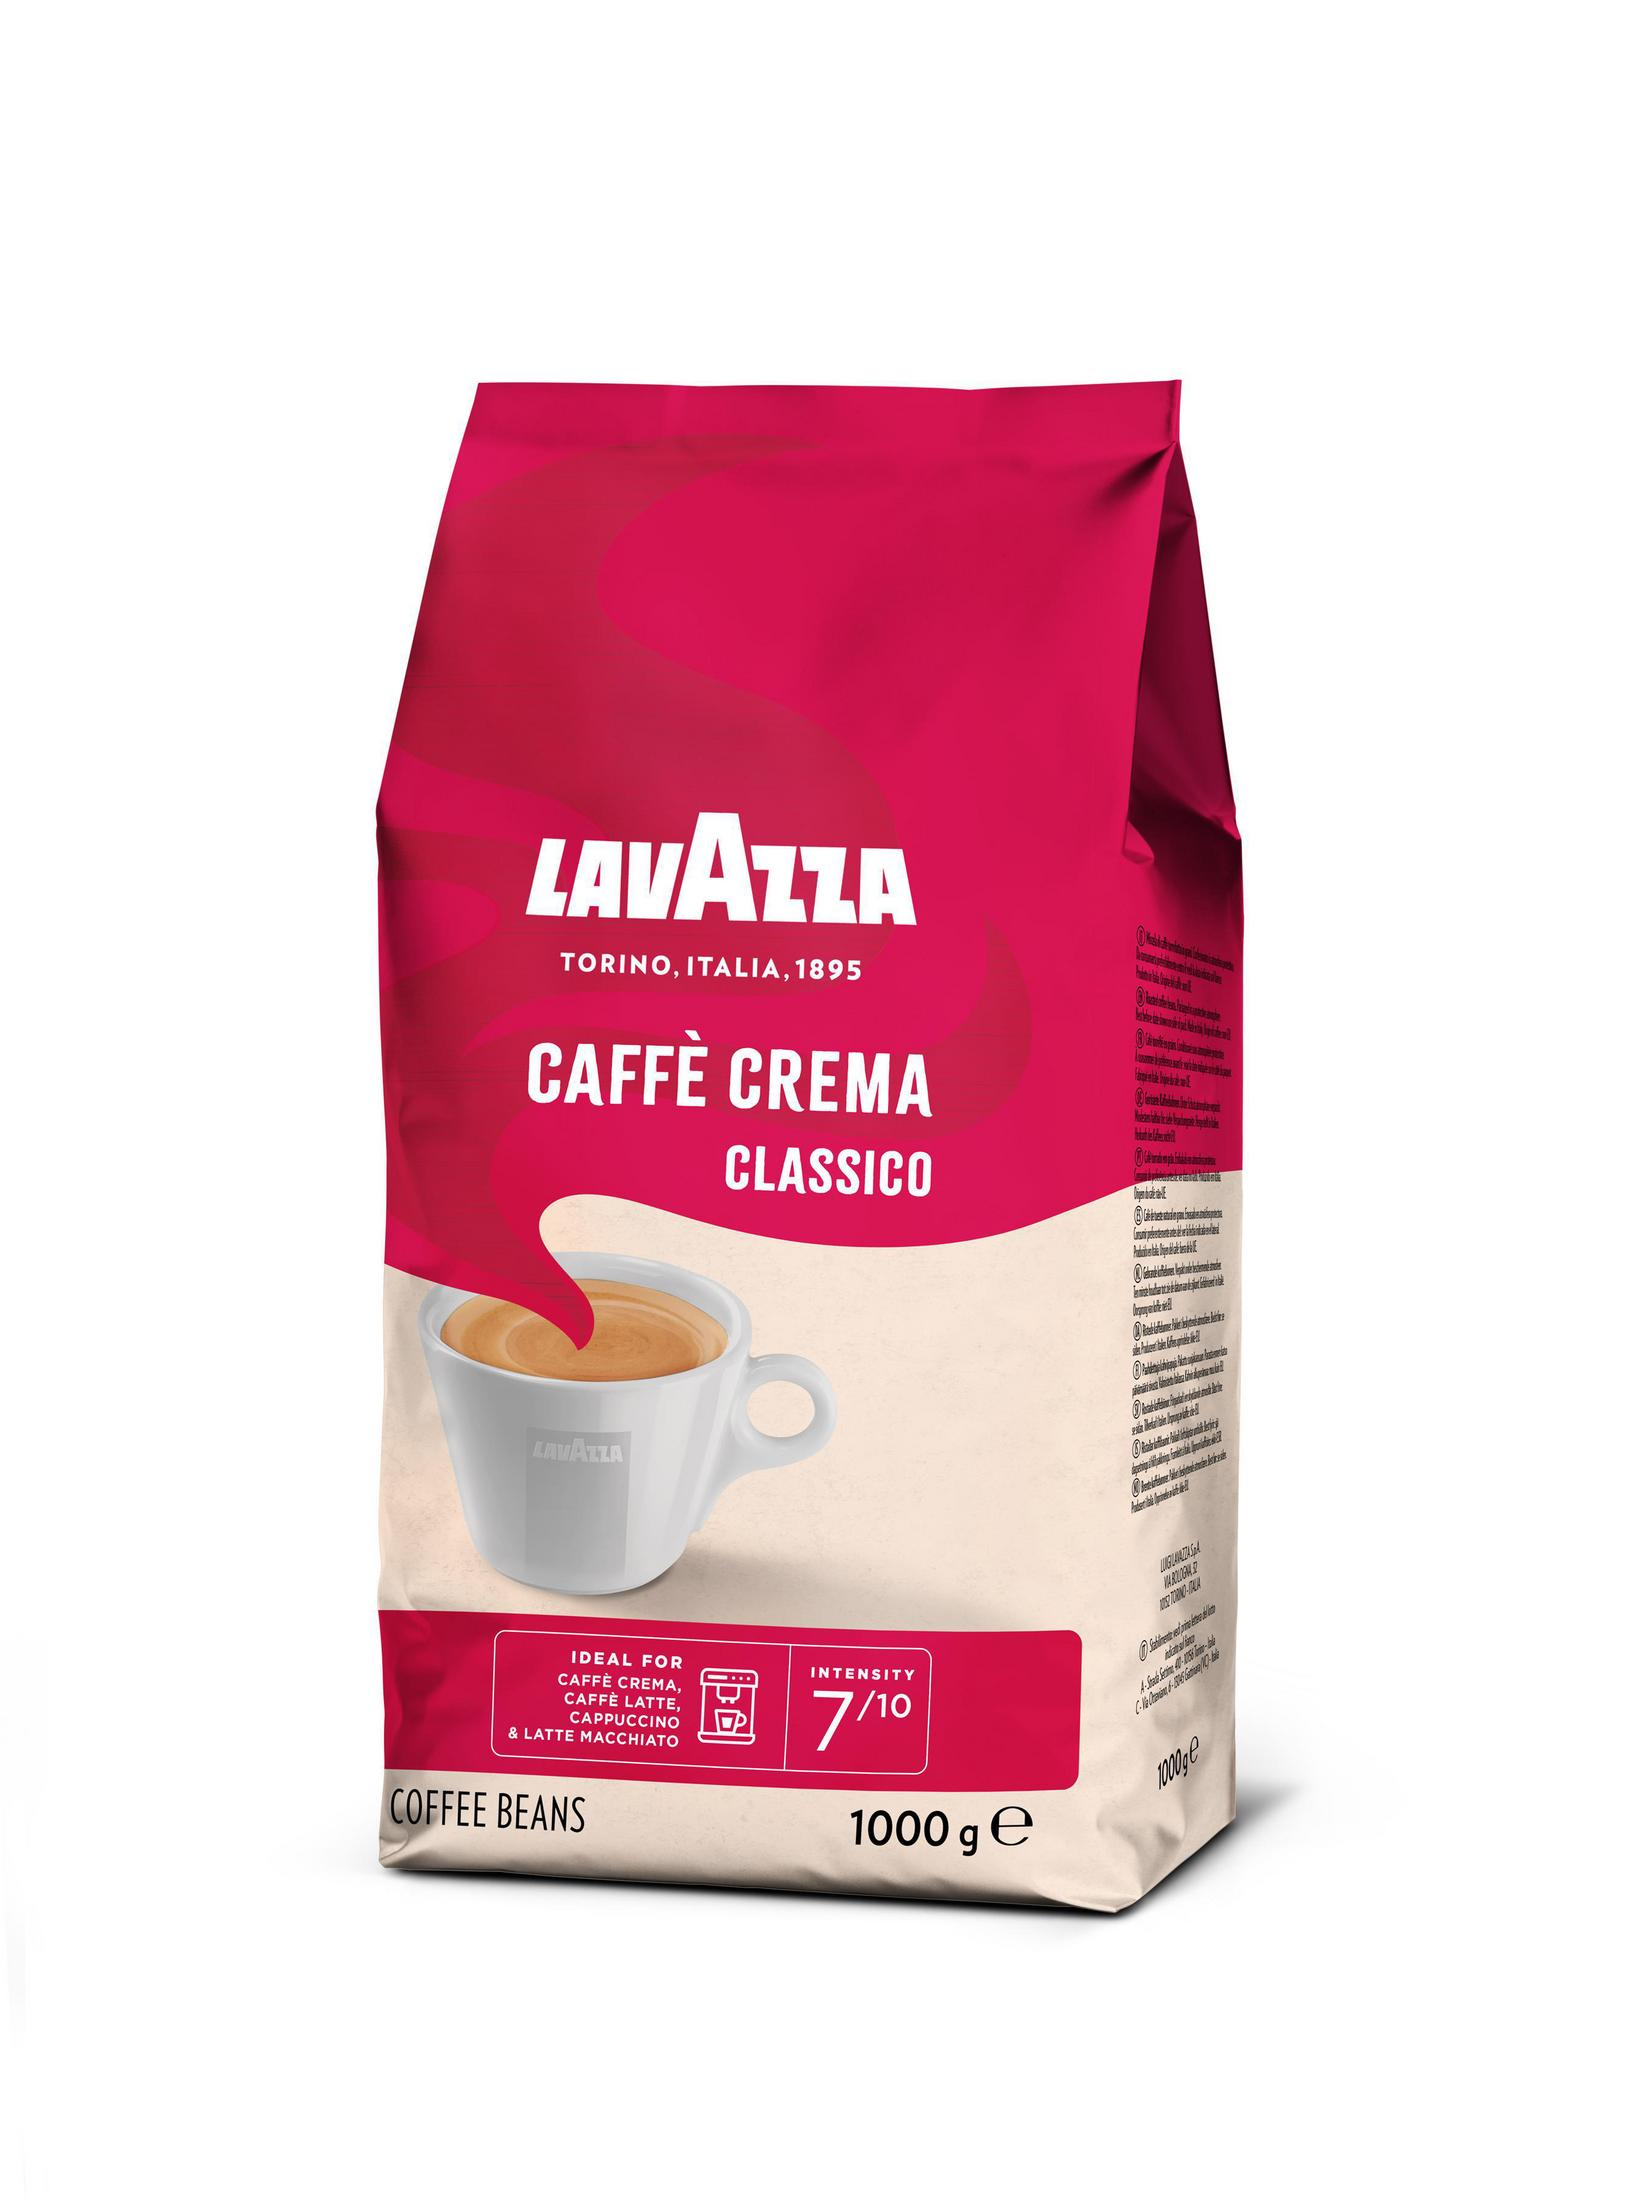 LAVAZZA 2899 CAFFE CREMA (Kaffeevollautomaten) Kaffeebohnen 1KG CLASSICO